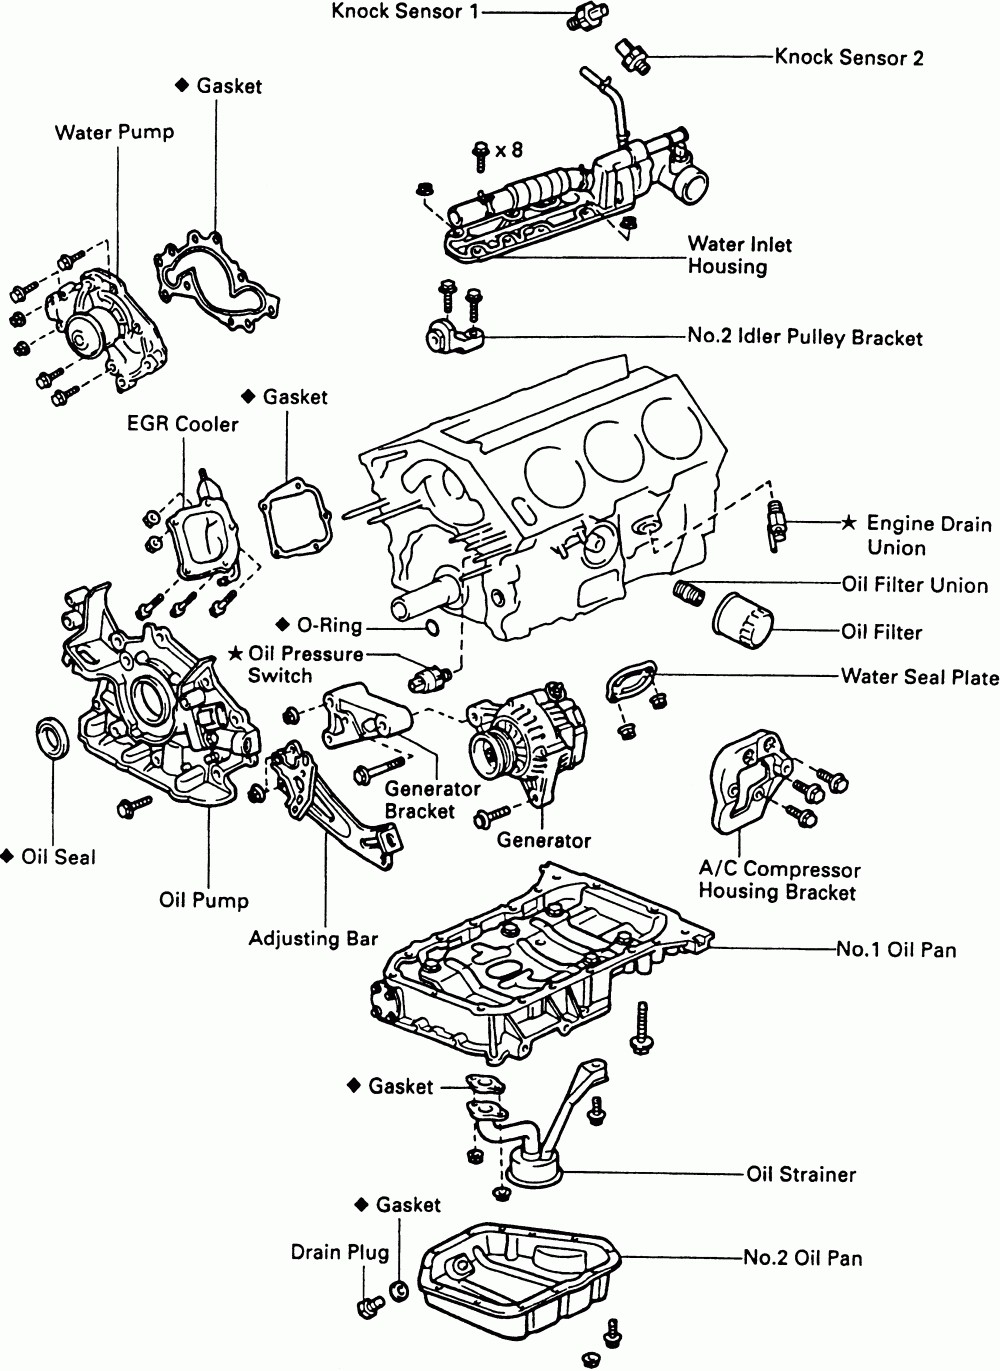 2004 toyota Camry Engine Layout 2004 toyota Camry Engine Parts Diagram Of 2004 toyota Camry Engine Layout